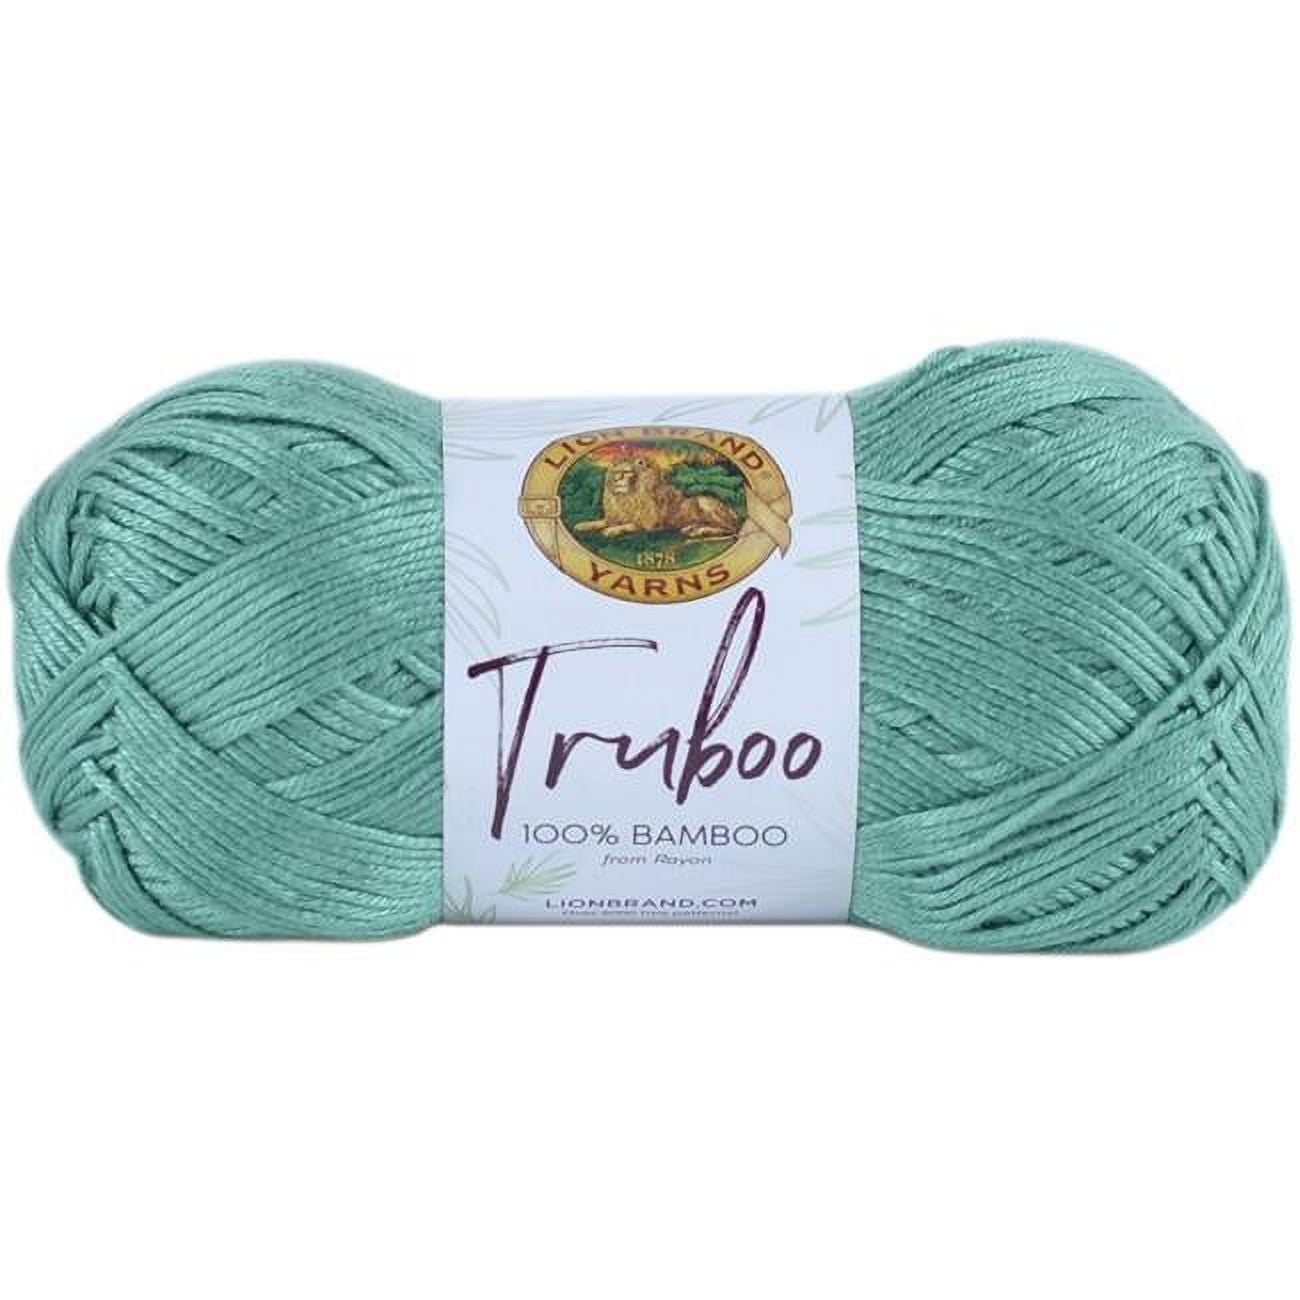 3 Pack) Lion Brand Yarn 837-156 Truboo Yarn, Mint